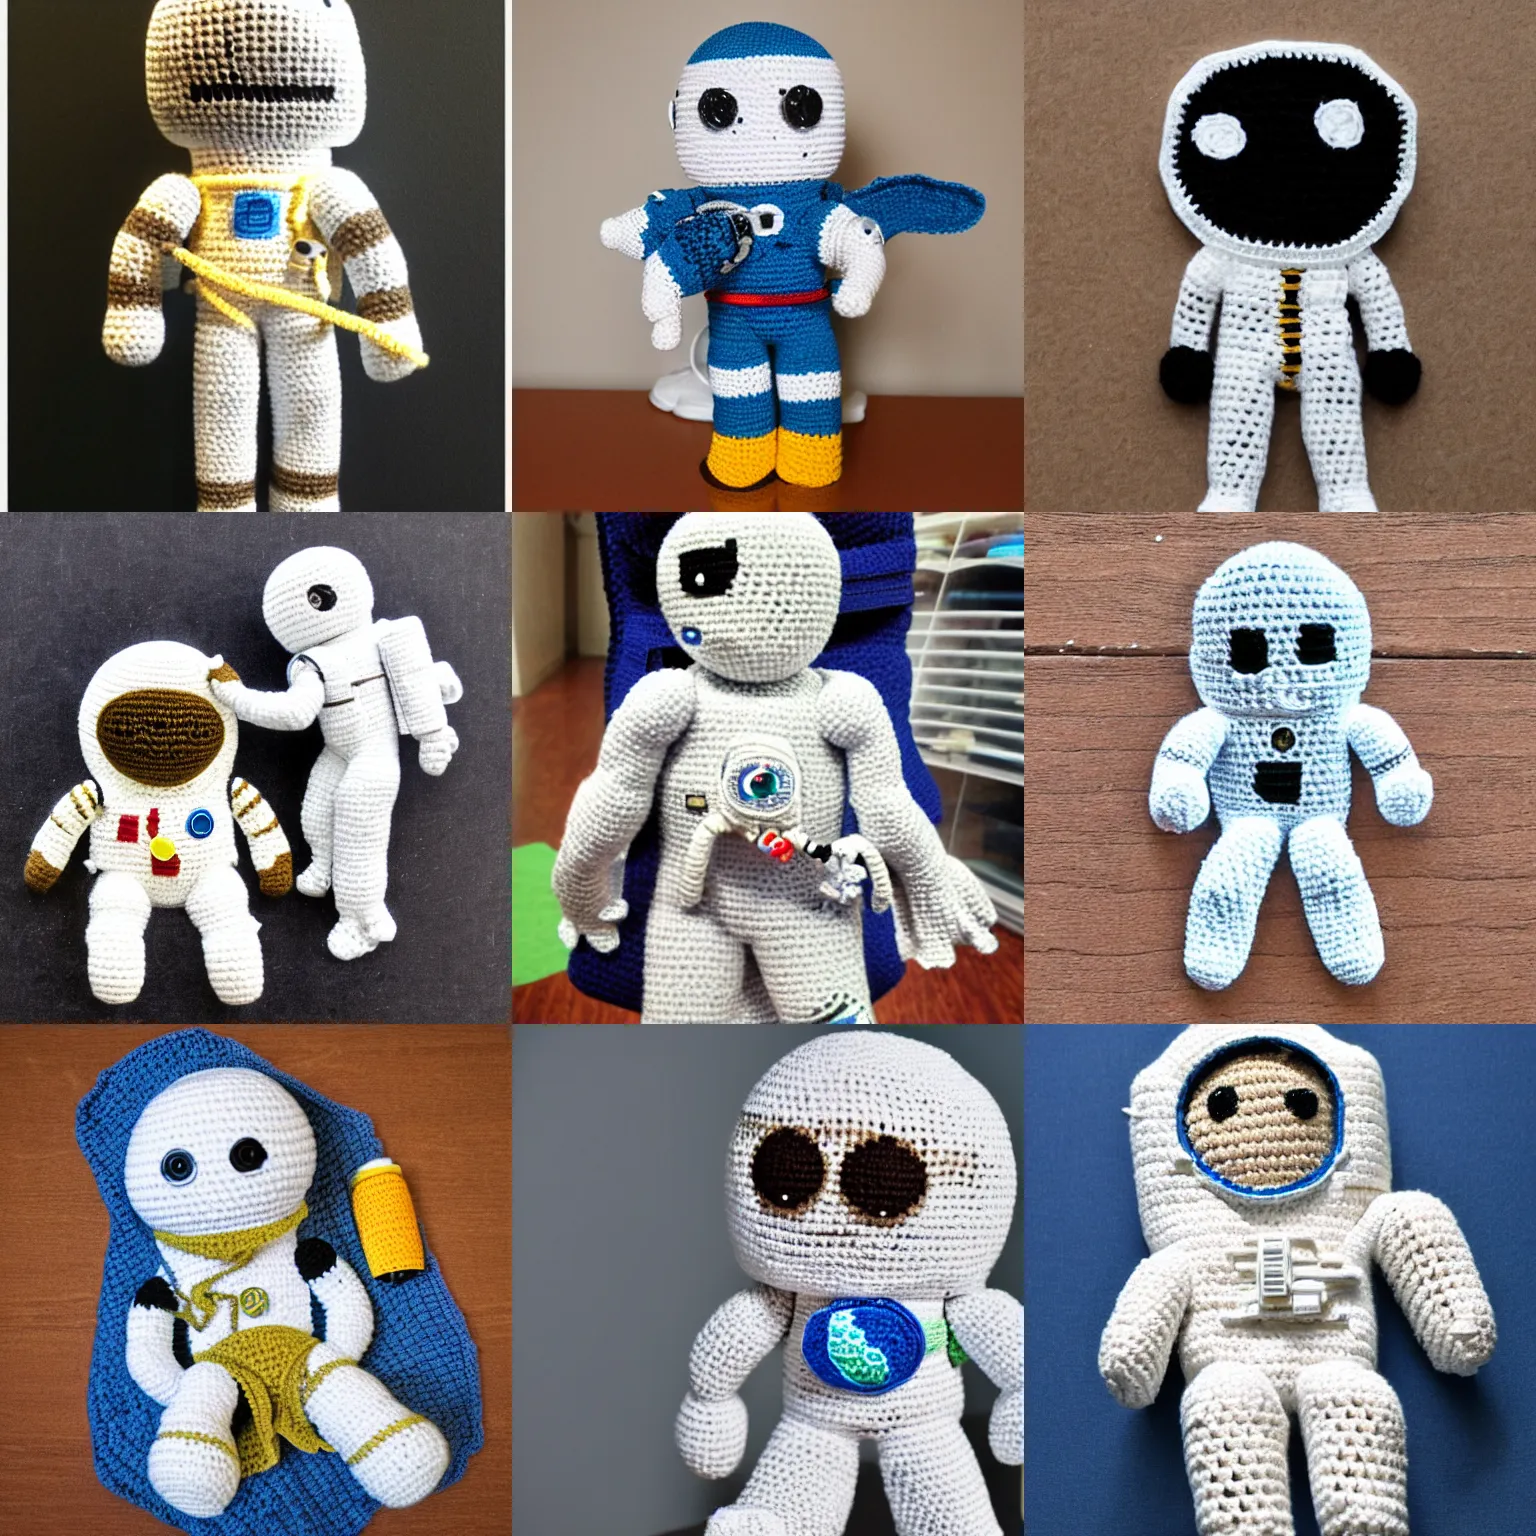 Prompt: a crochet astronaut